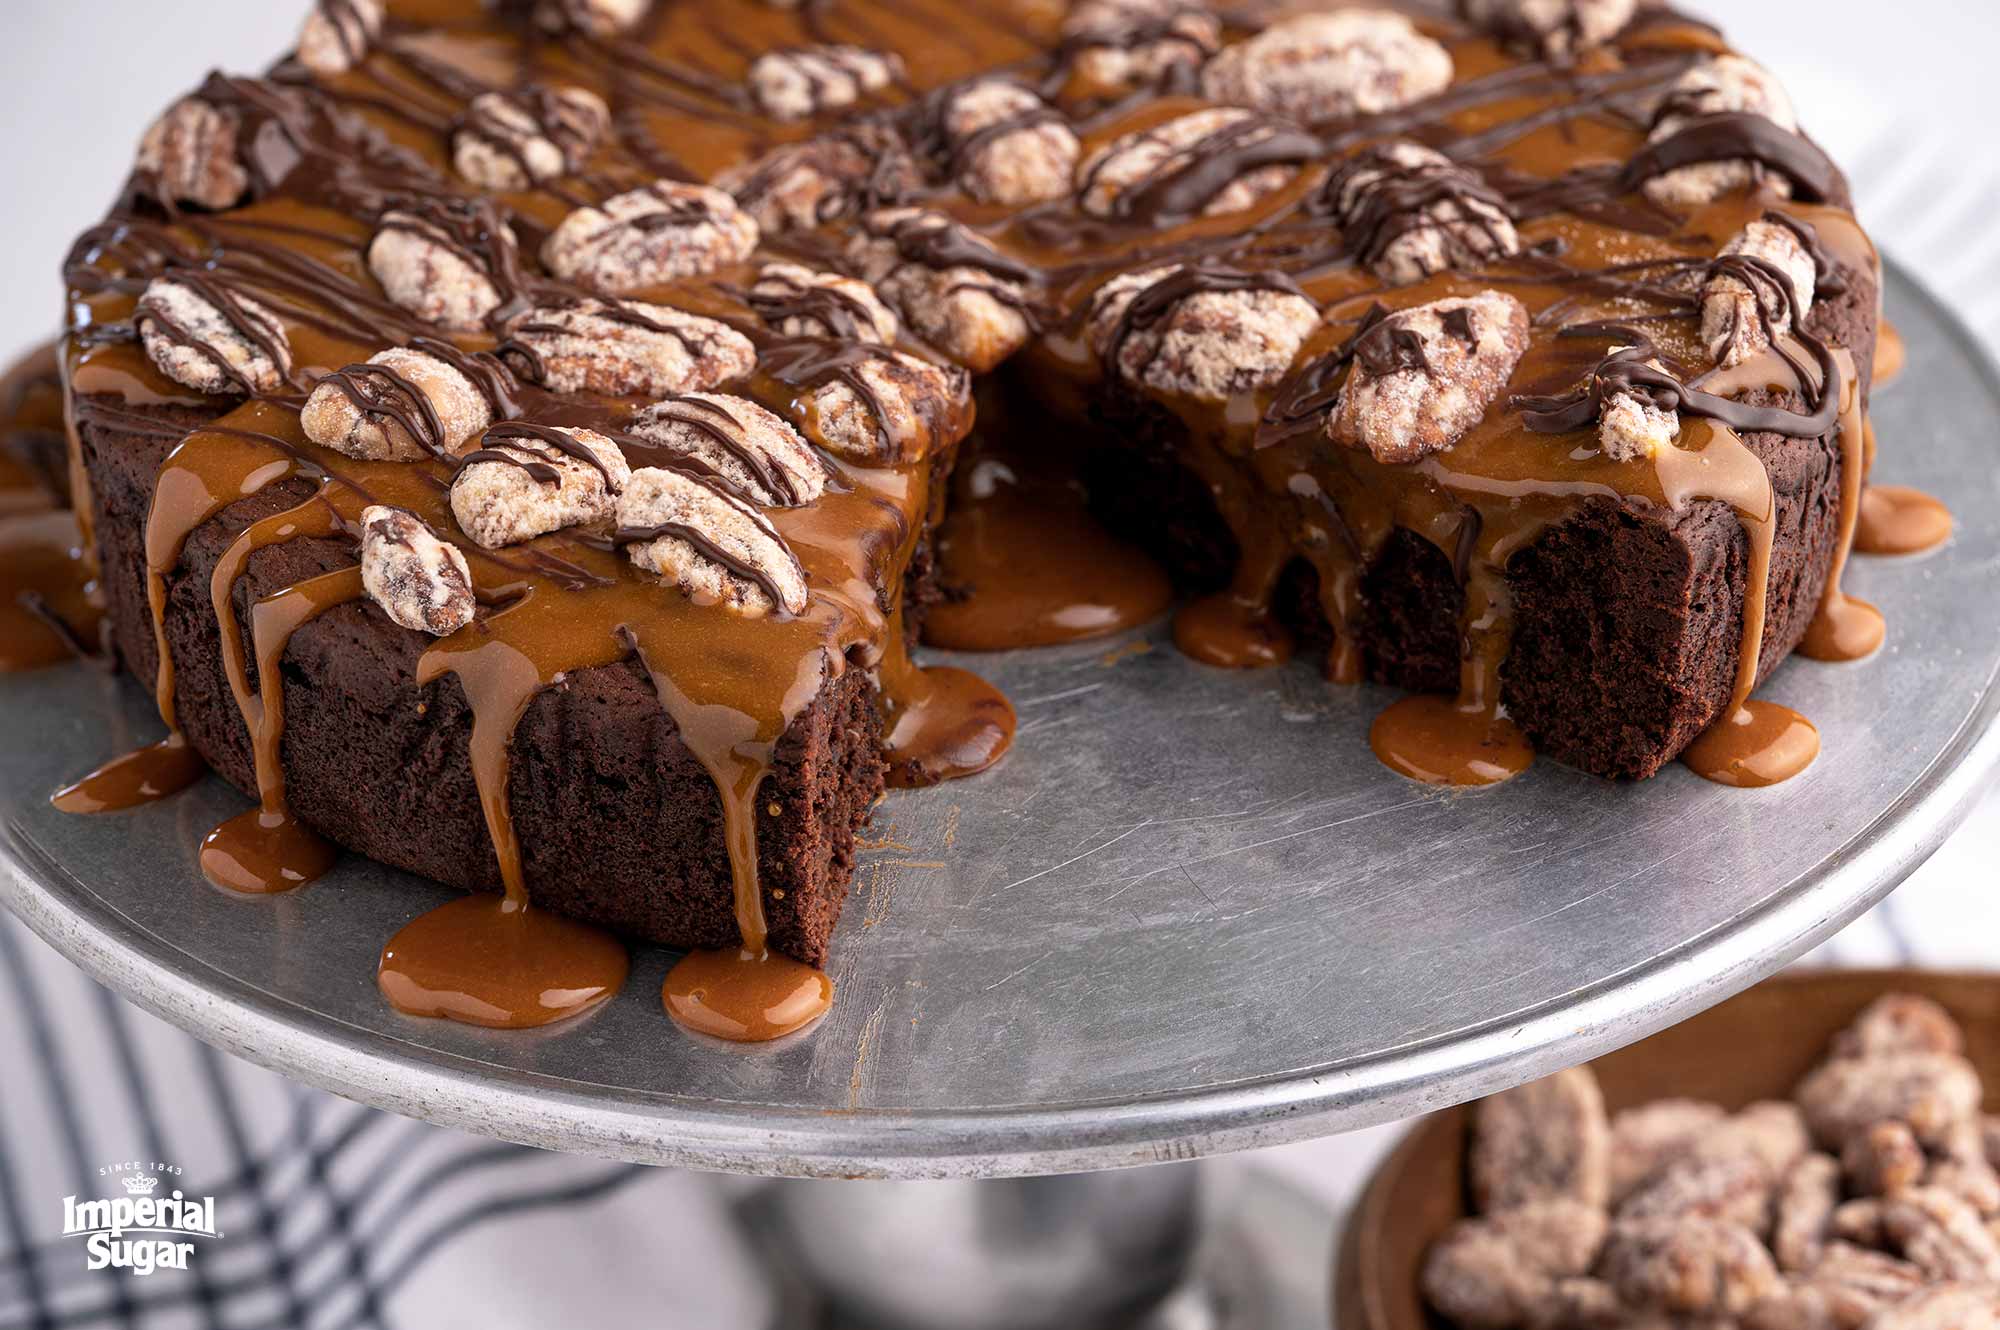 Chocolate Brownie Cake Recipe | I Am Baker